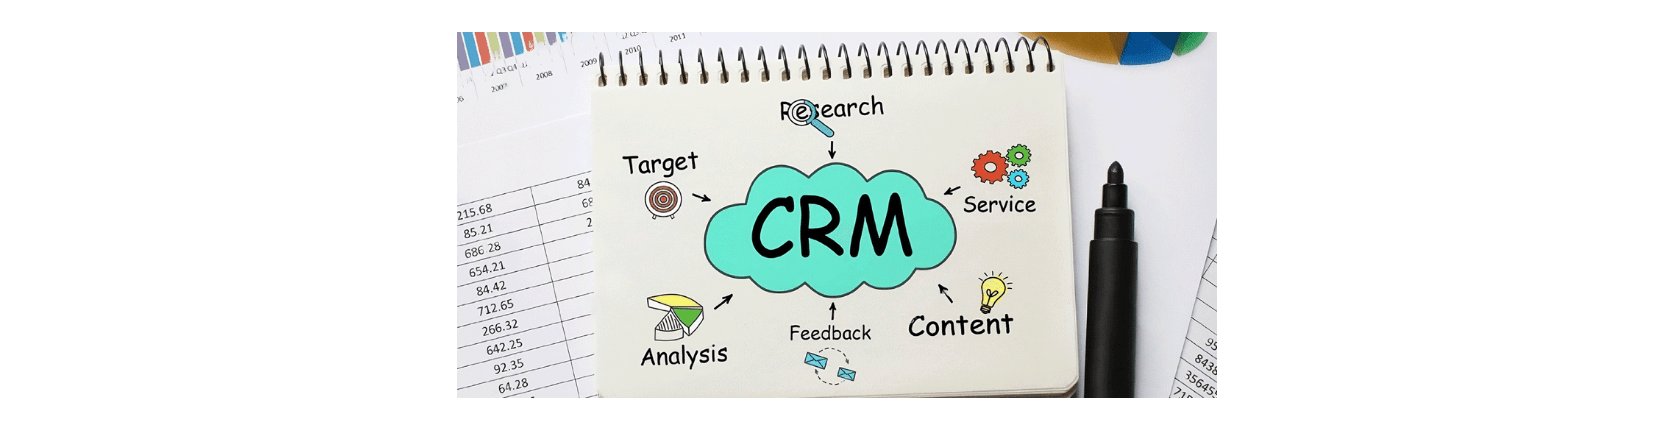 اتصال مرکزتماس به CRM